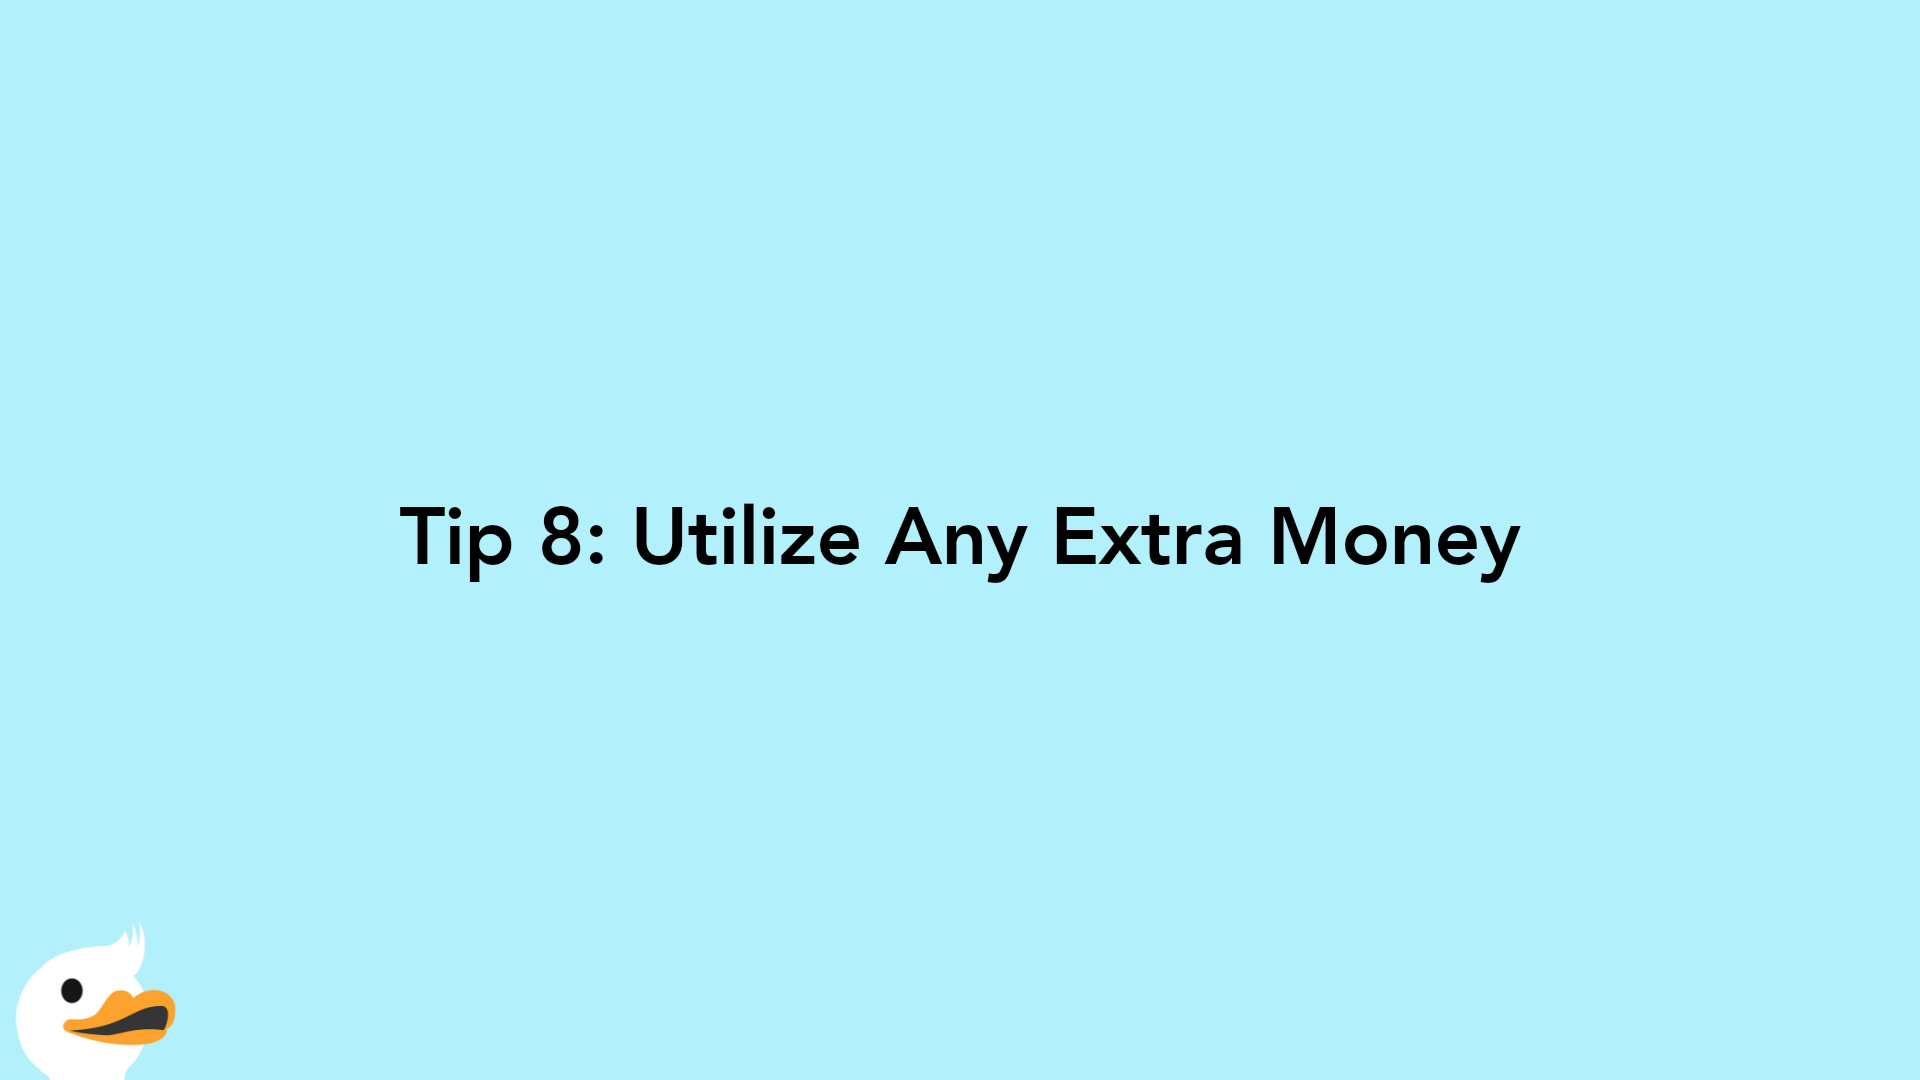 Tip 8: Utilize Any Extra Money